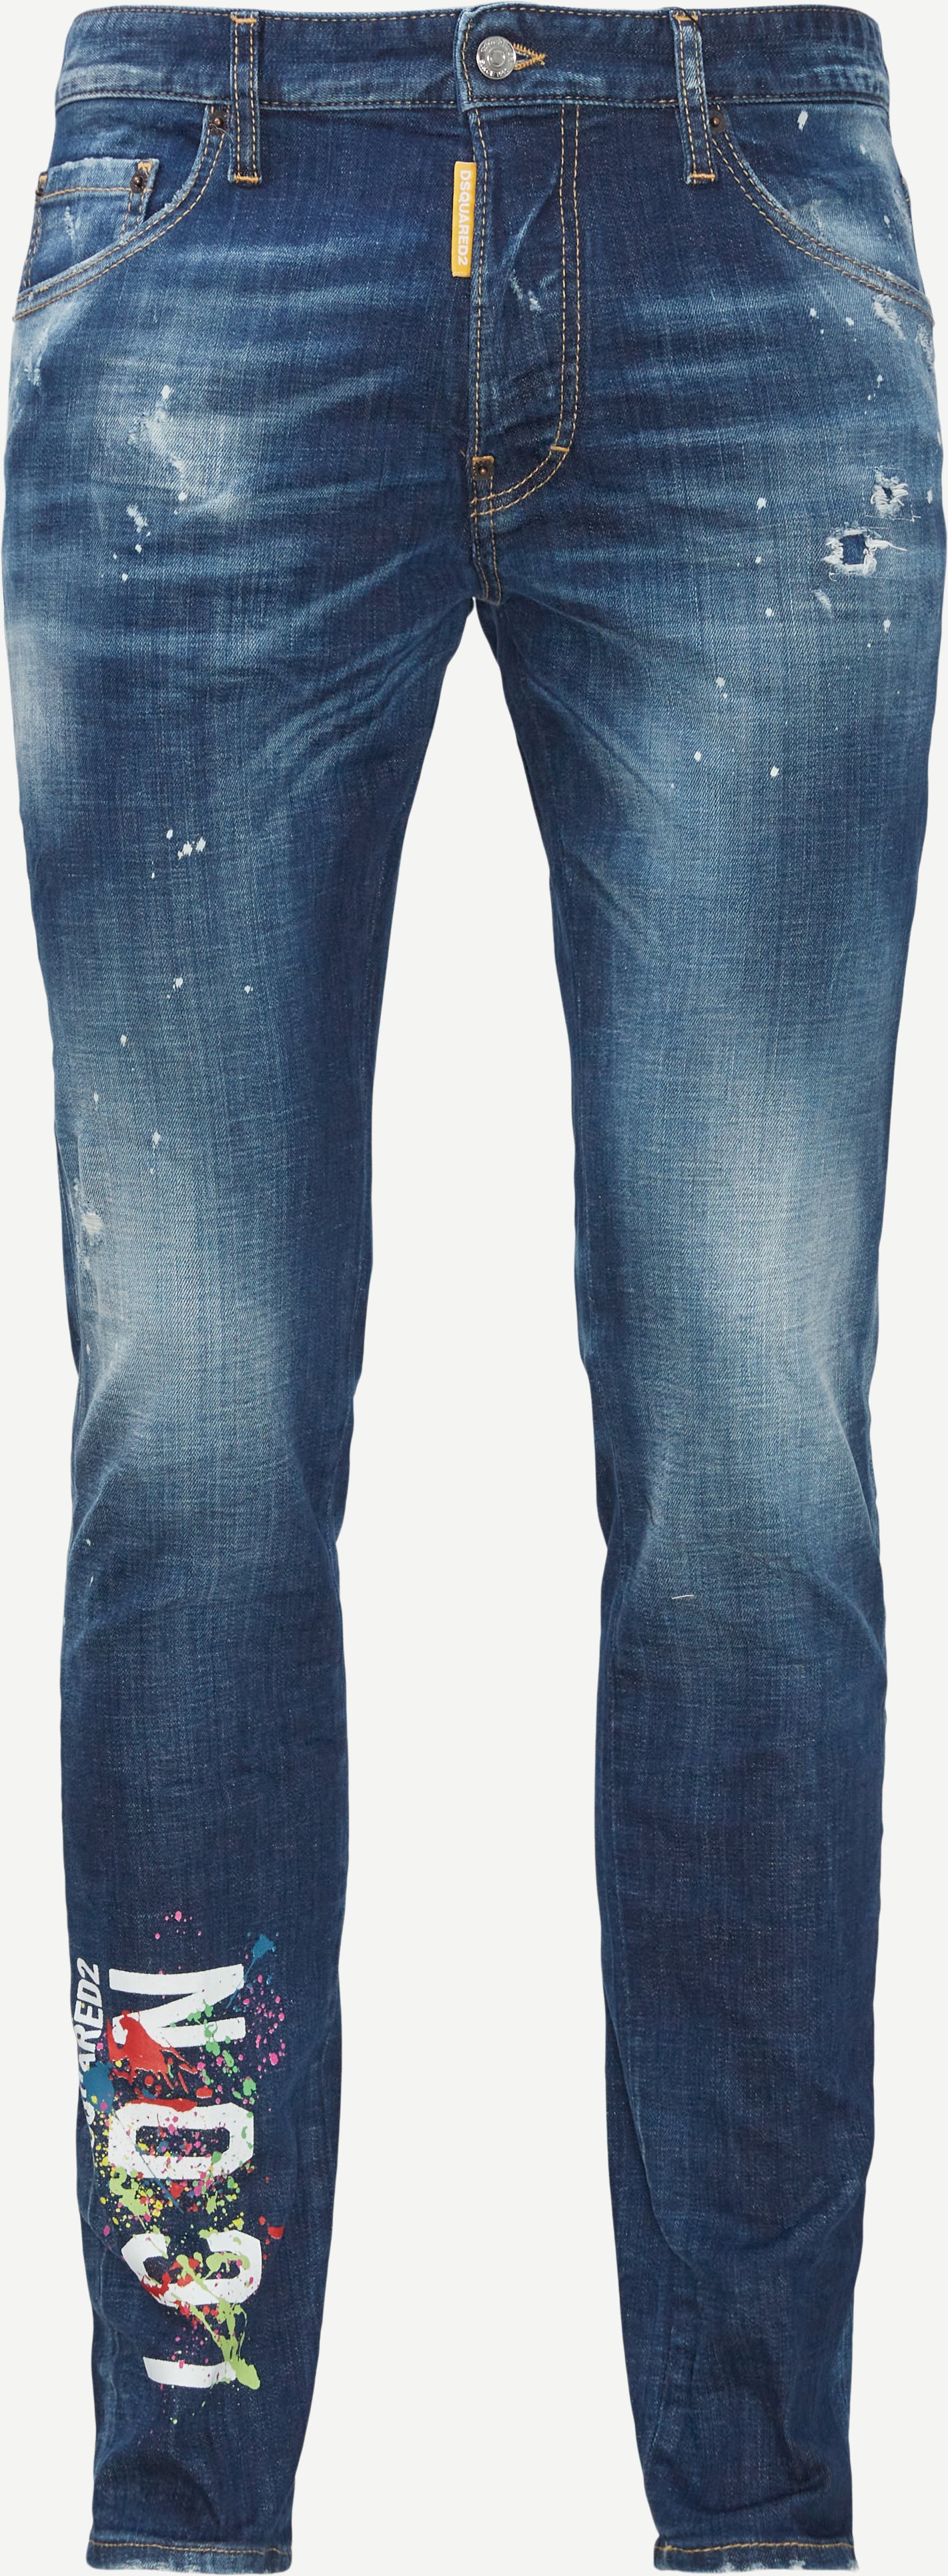 Jeans - Slim fit - Denim